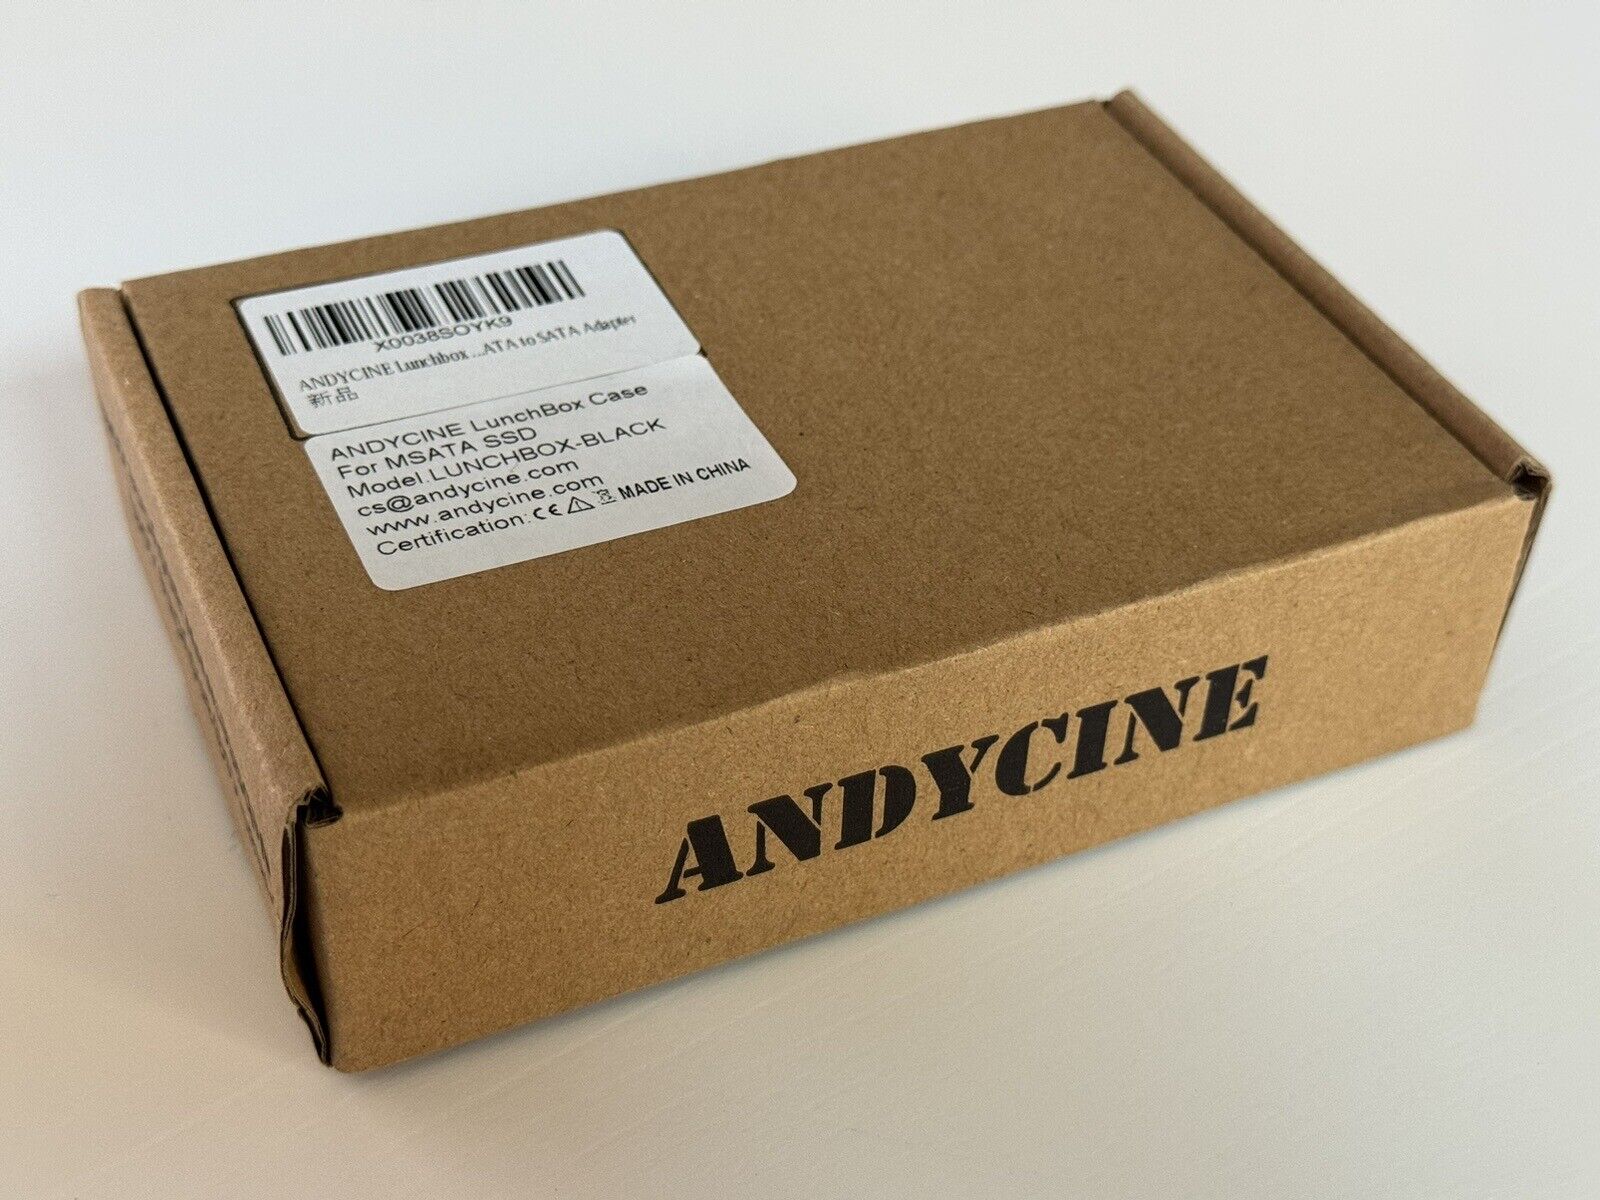 ANDYCINE LunchBox Case BLACK for Atomos Ninja V Compatible w/ mSATA SSD - NEW ANDYCINE Not Applicable - фотография #2